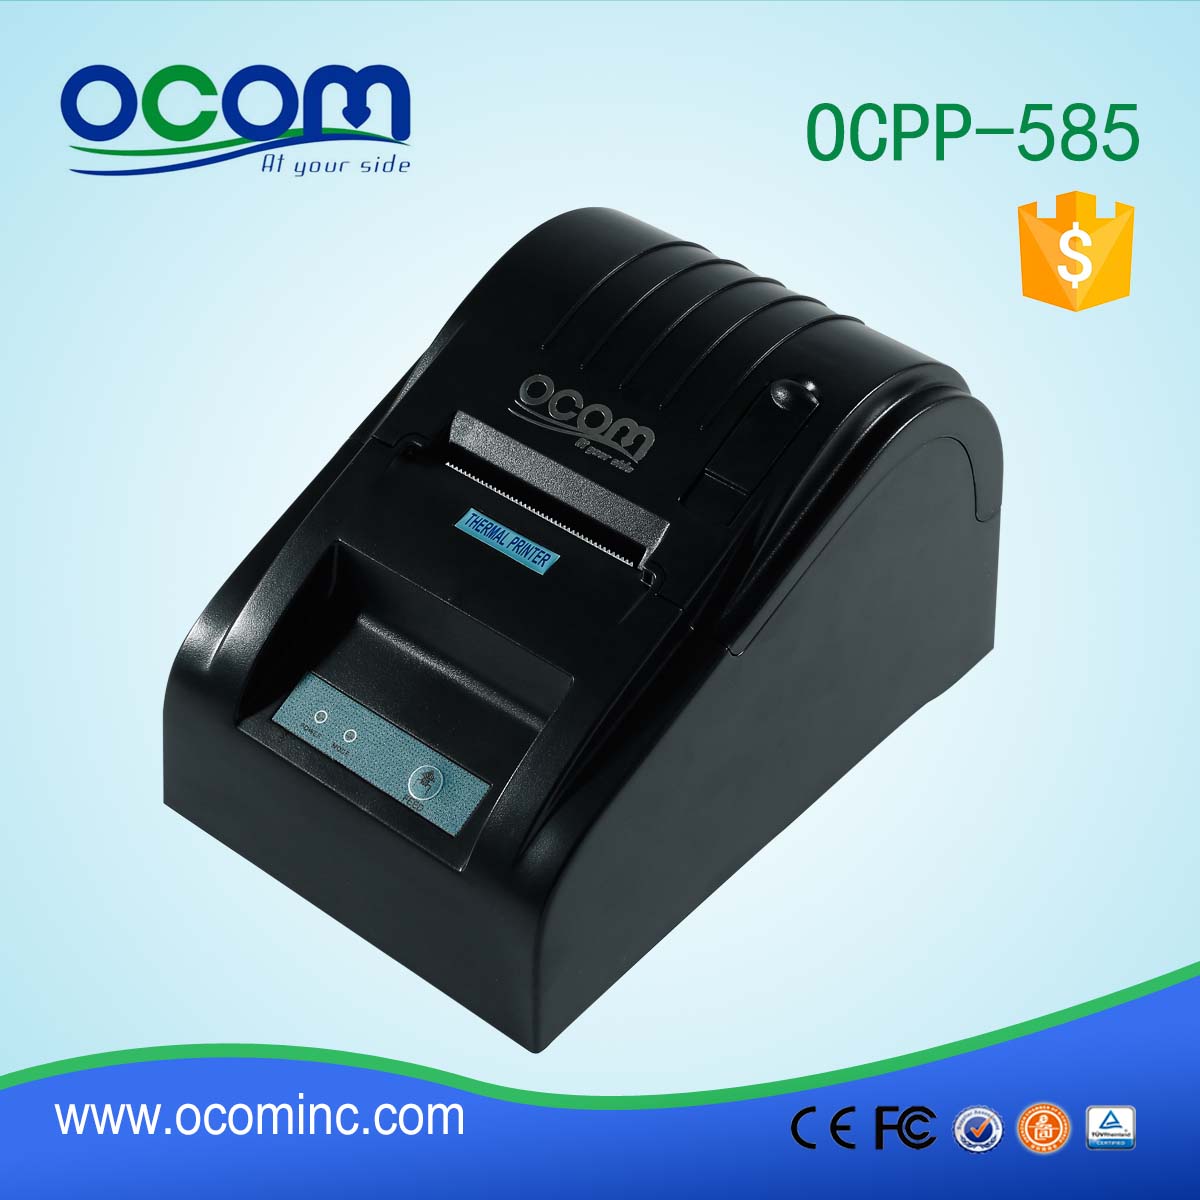 OCPP-586-L Porta per stampante termica porta ricevute economica da 58mm